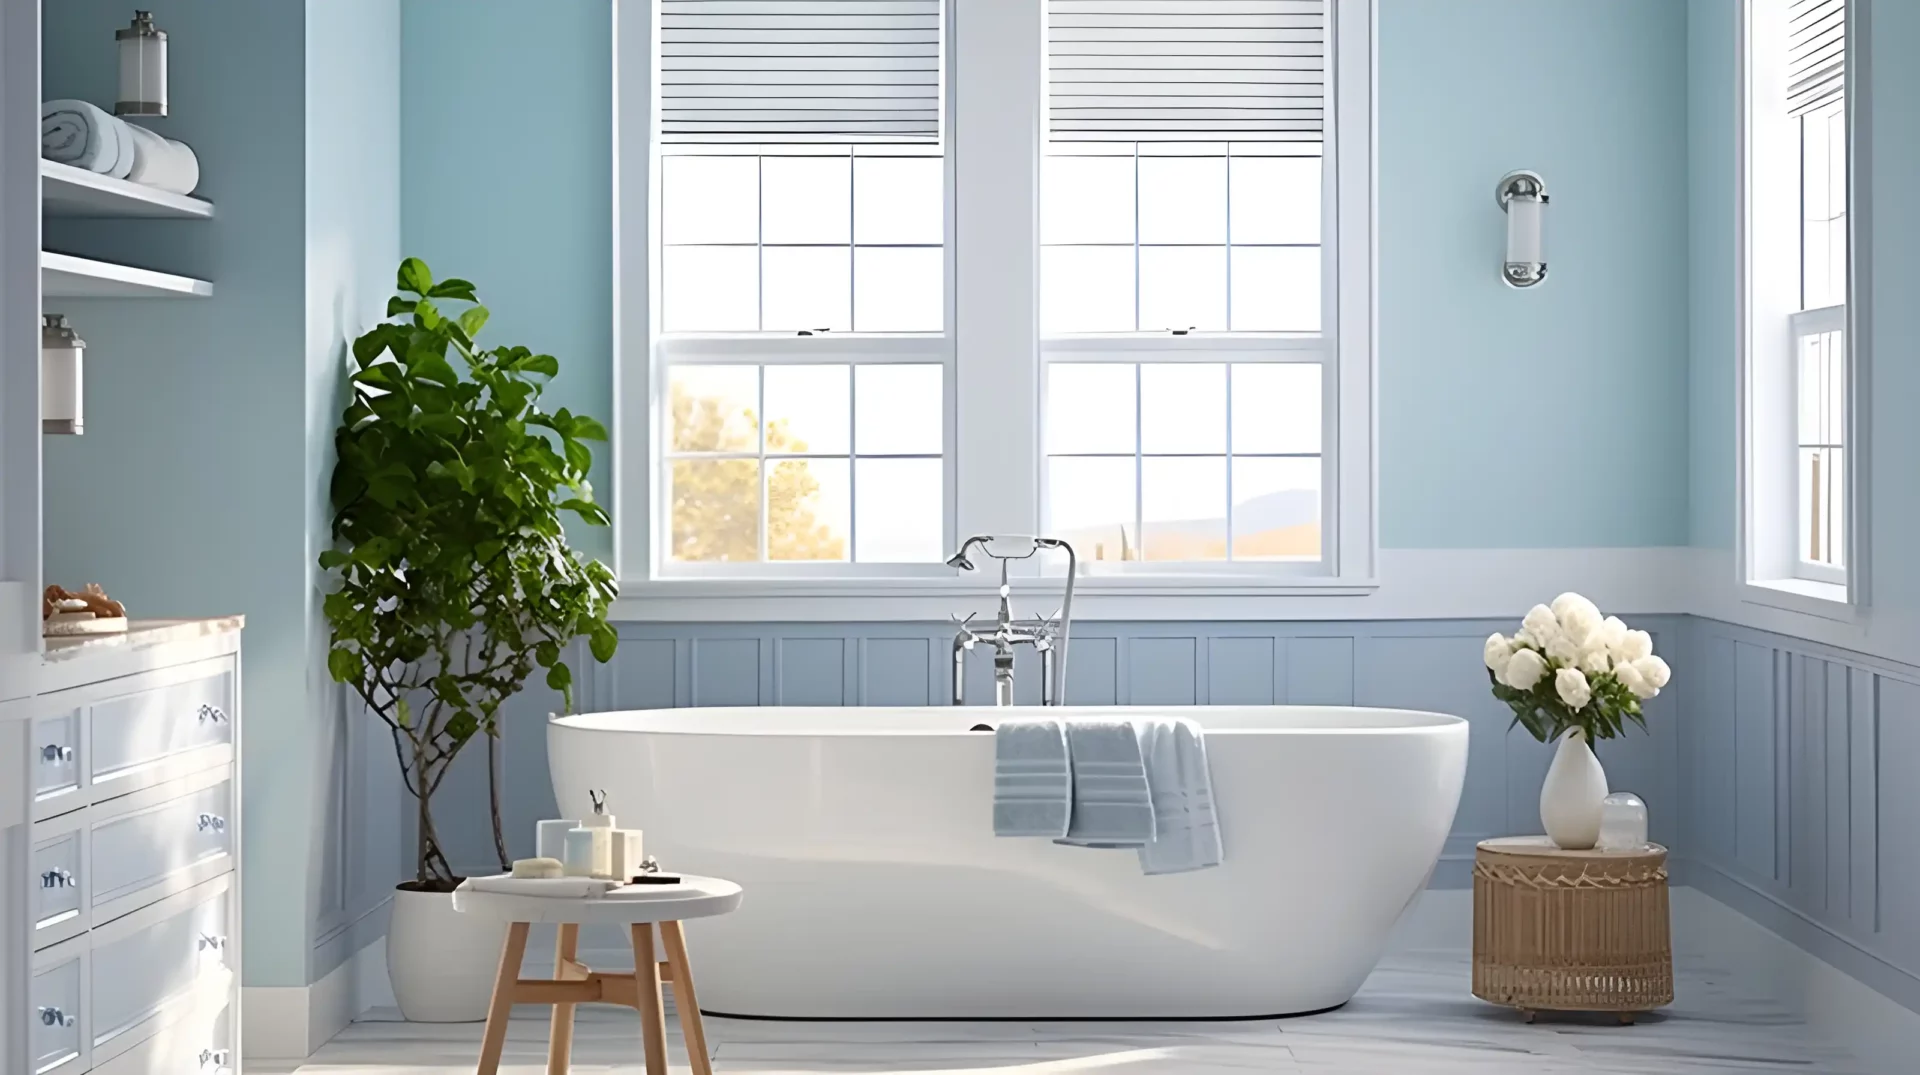 Small blue bathroom decorating ideas: A bathroom with blue walls and a white tub.